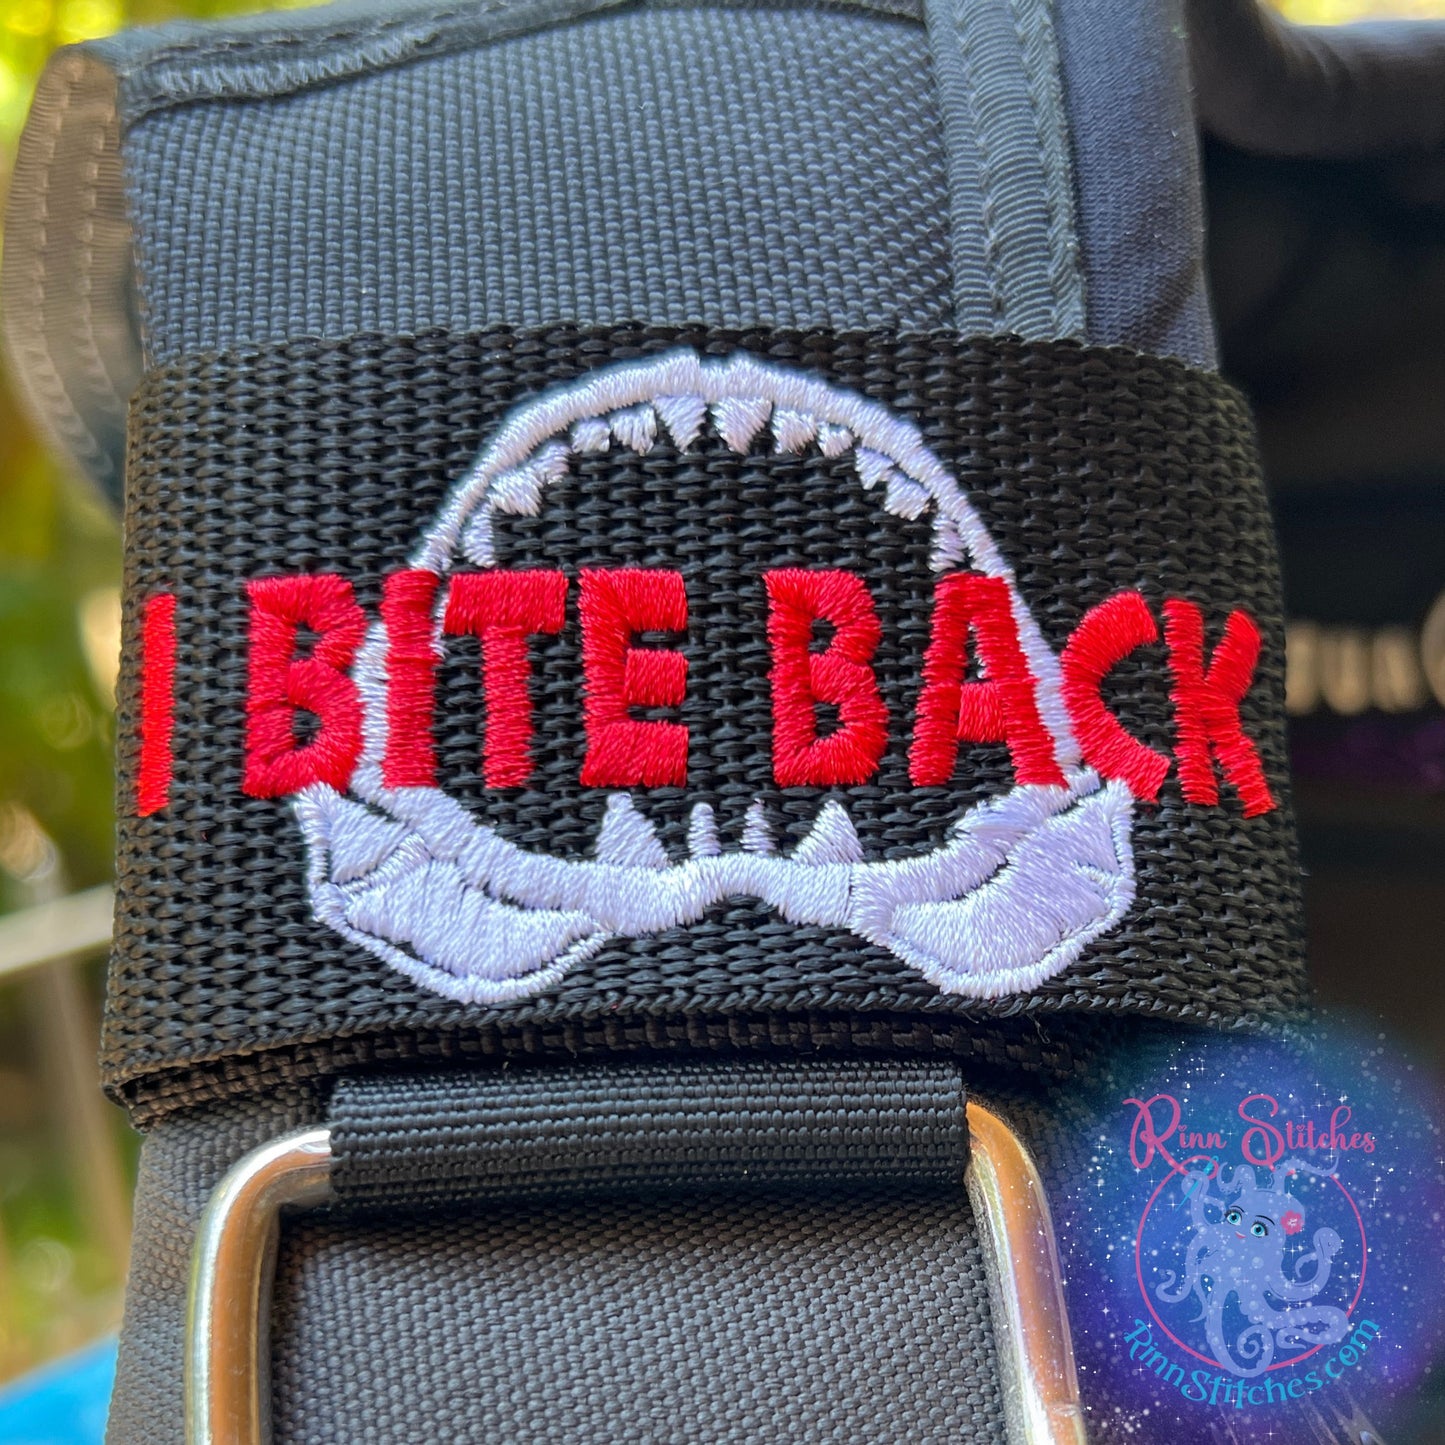 I Bite Back BCD Tag by Rinn Stitches - Maui, Hawaii